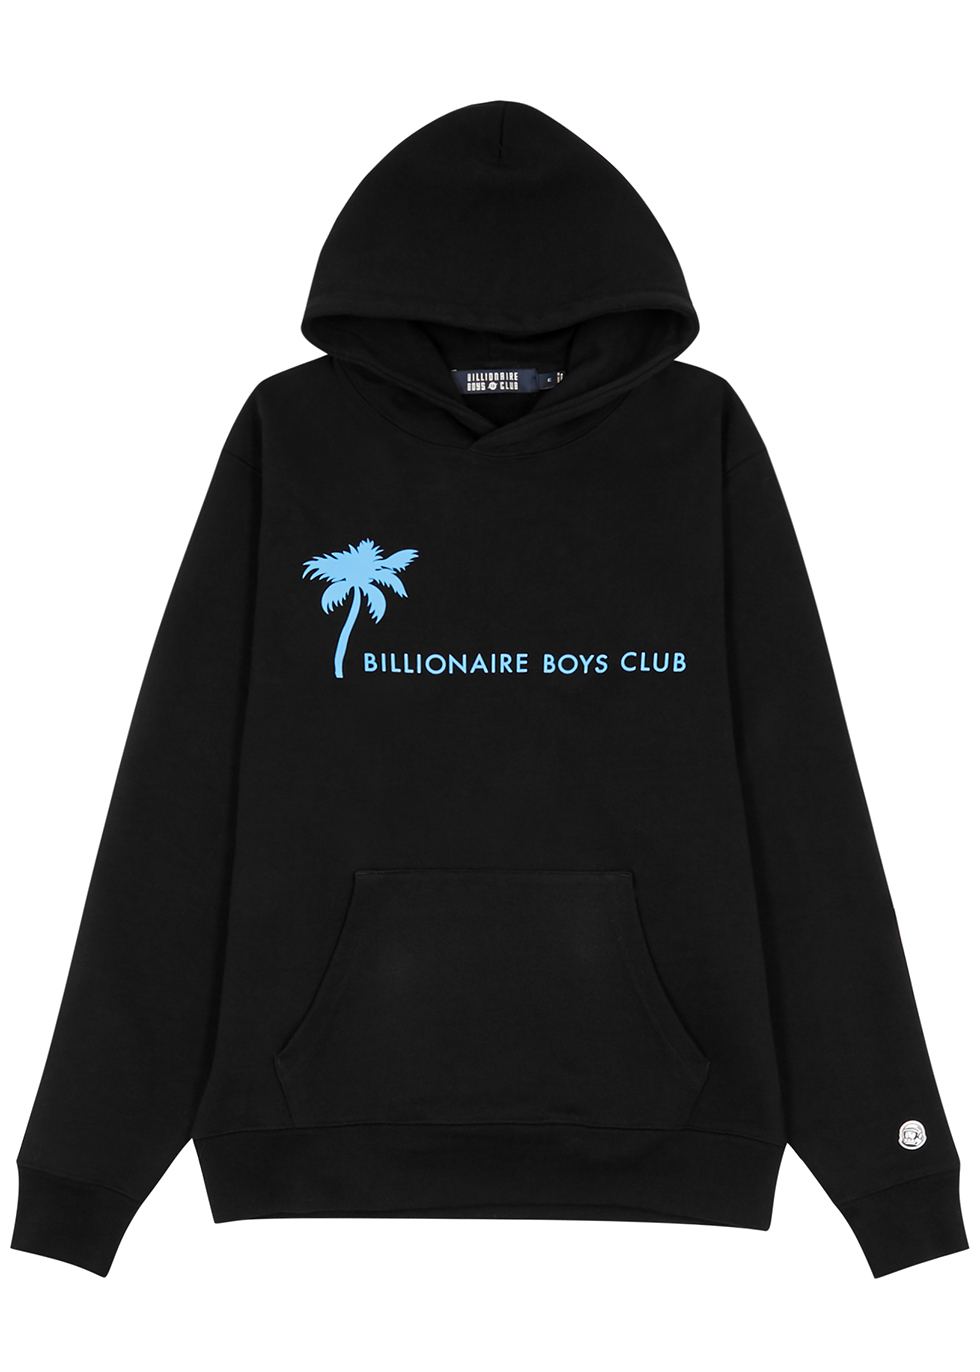 Black logo hooded cotton sweatshirt